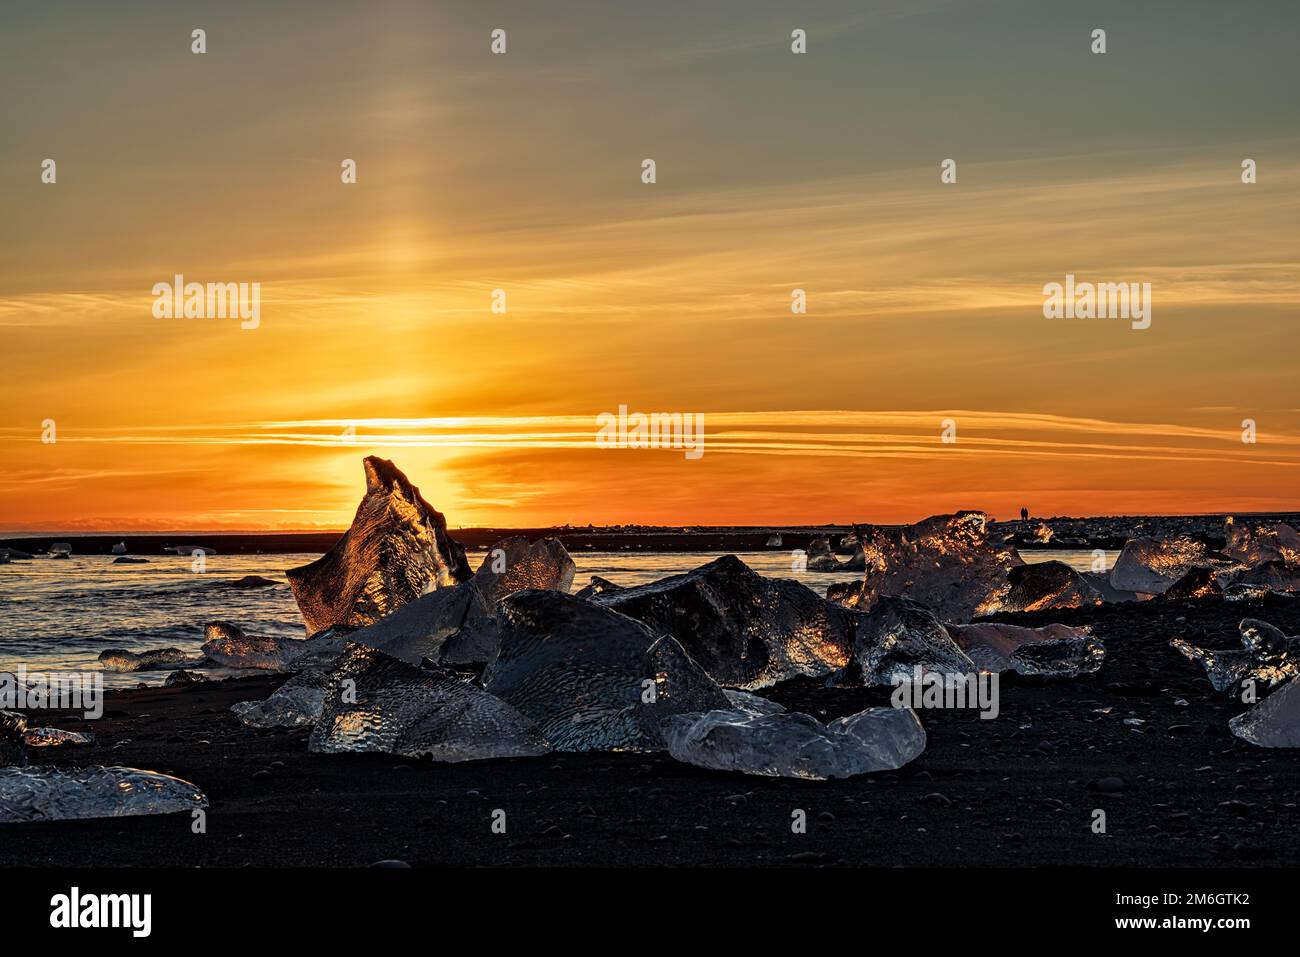 Icebergs in diamond beach at sunset, Iceland Stock Photo